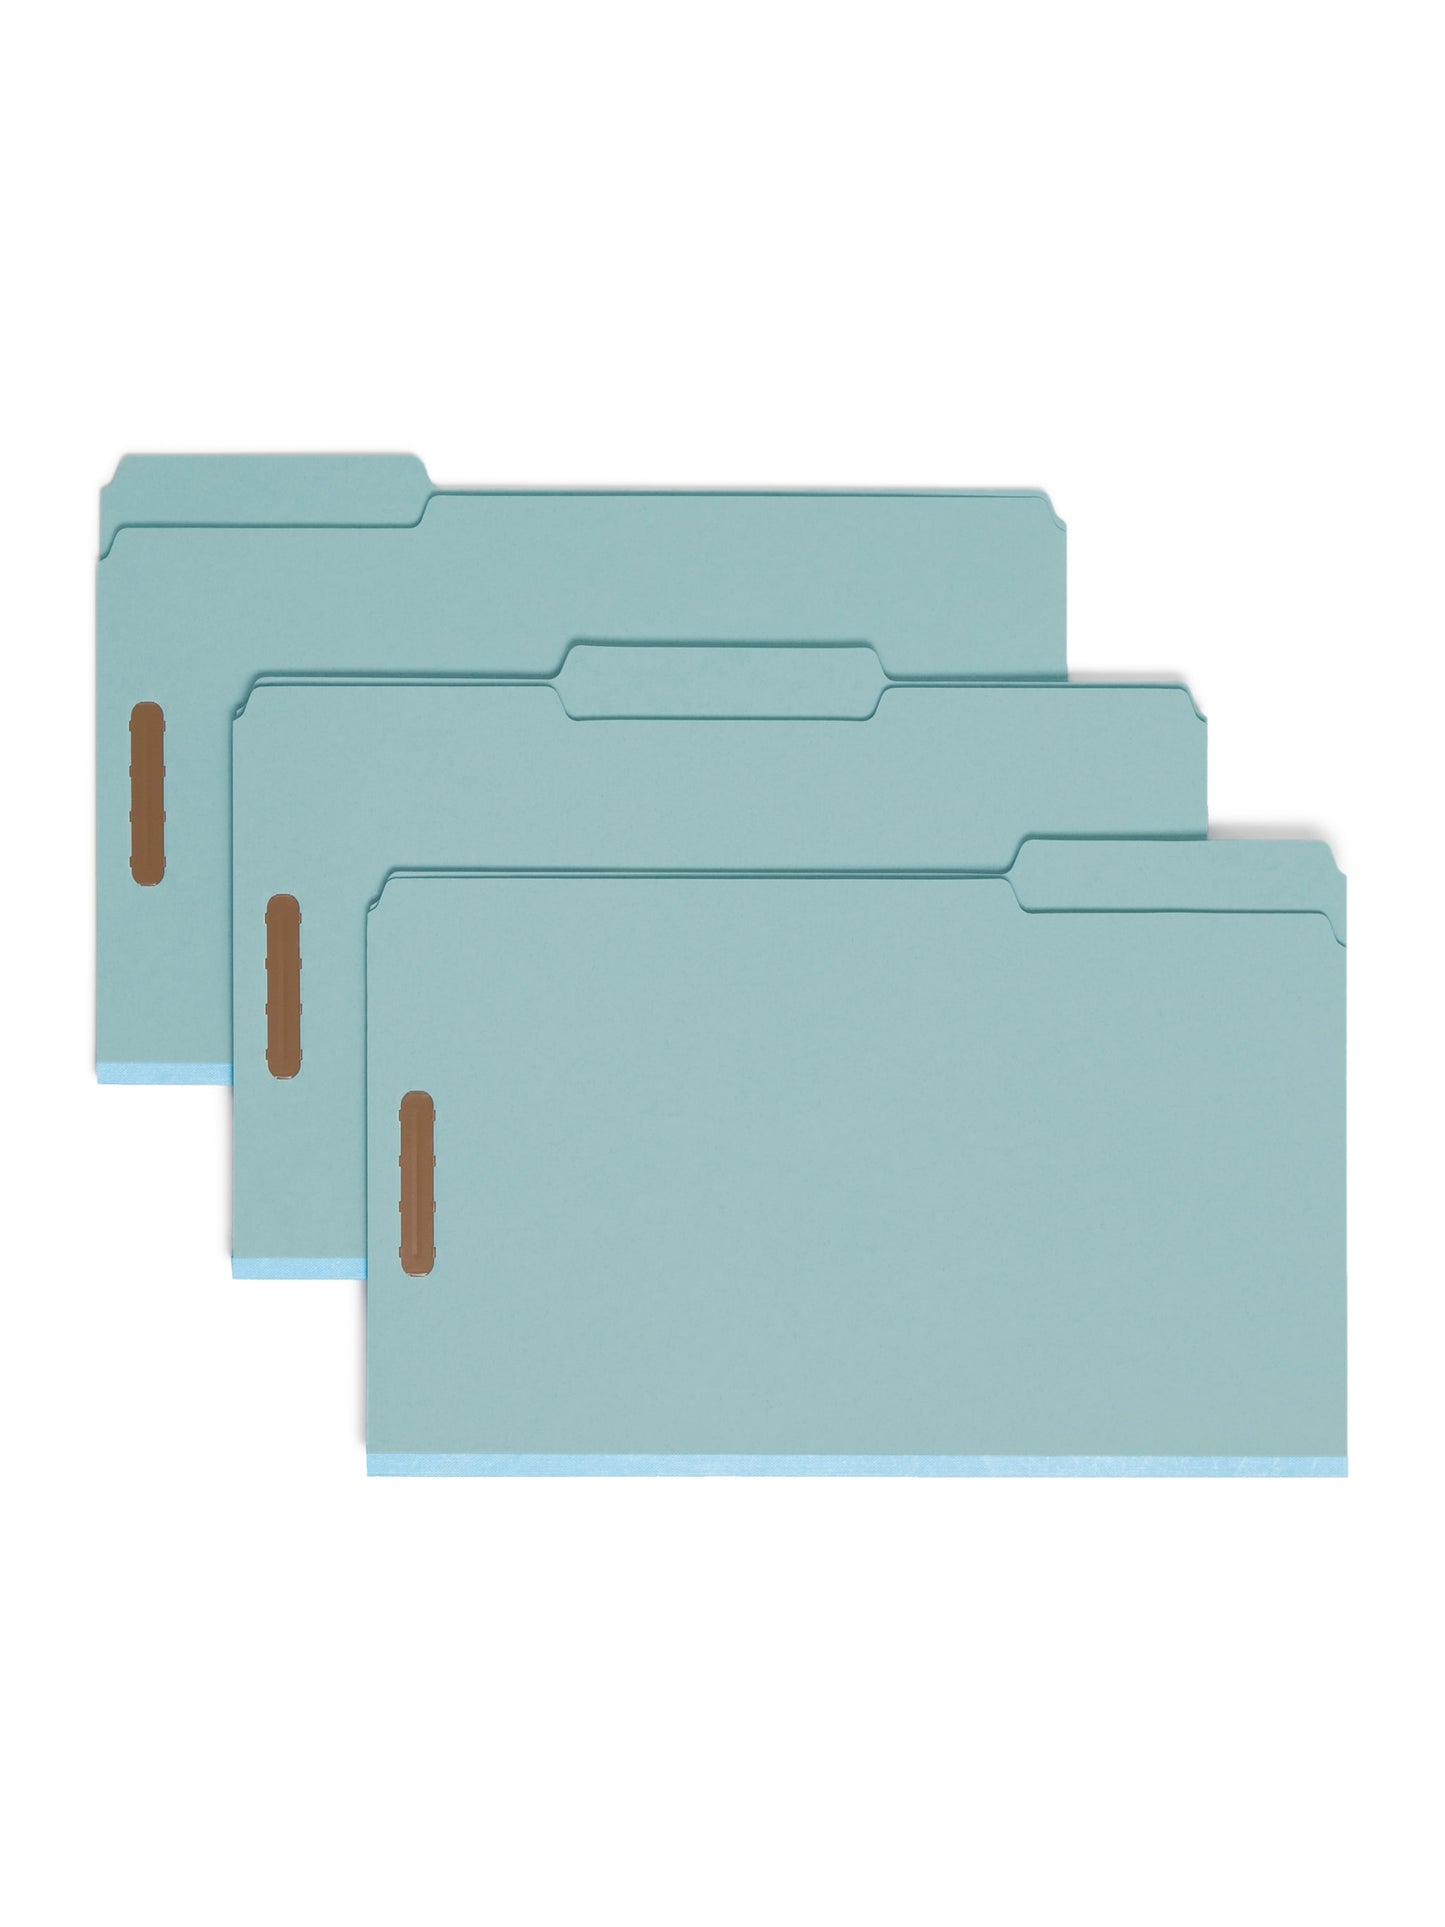 Pressboard Classification File Folders, 3 Dividers, 3 inch Expansion, Blue Color, Legal Size, Set of 0, 30086486190900